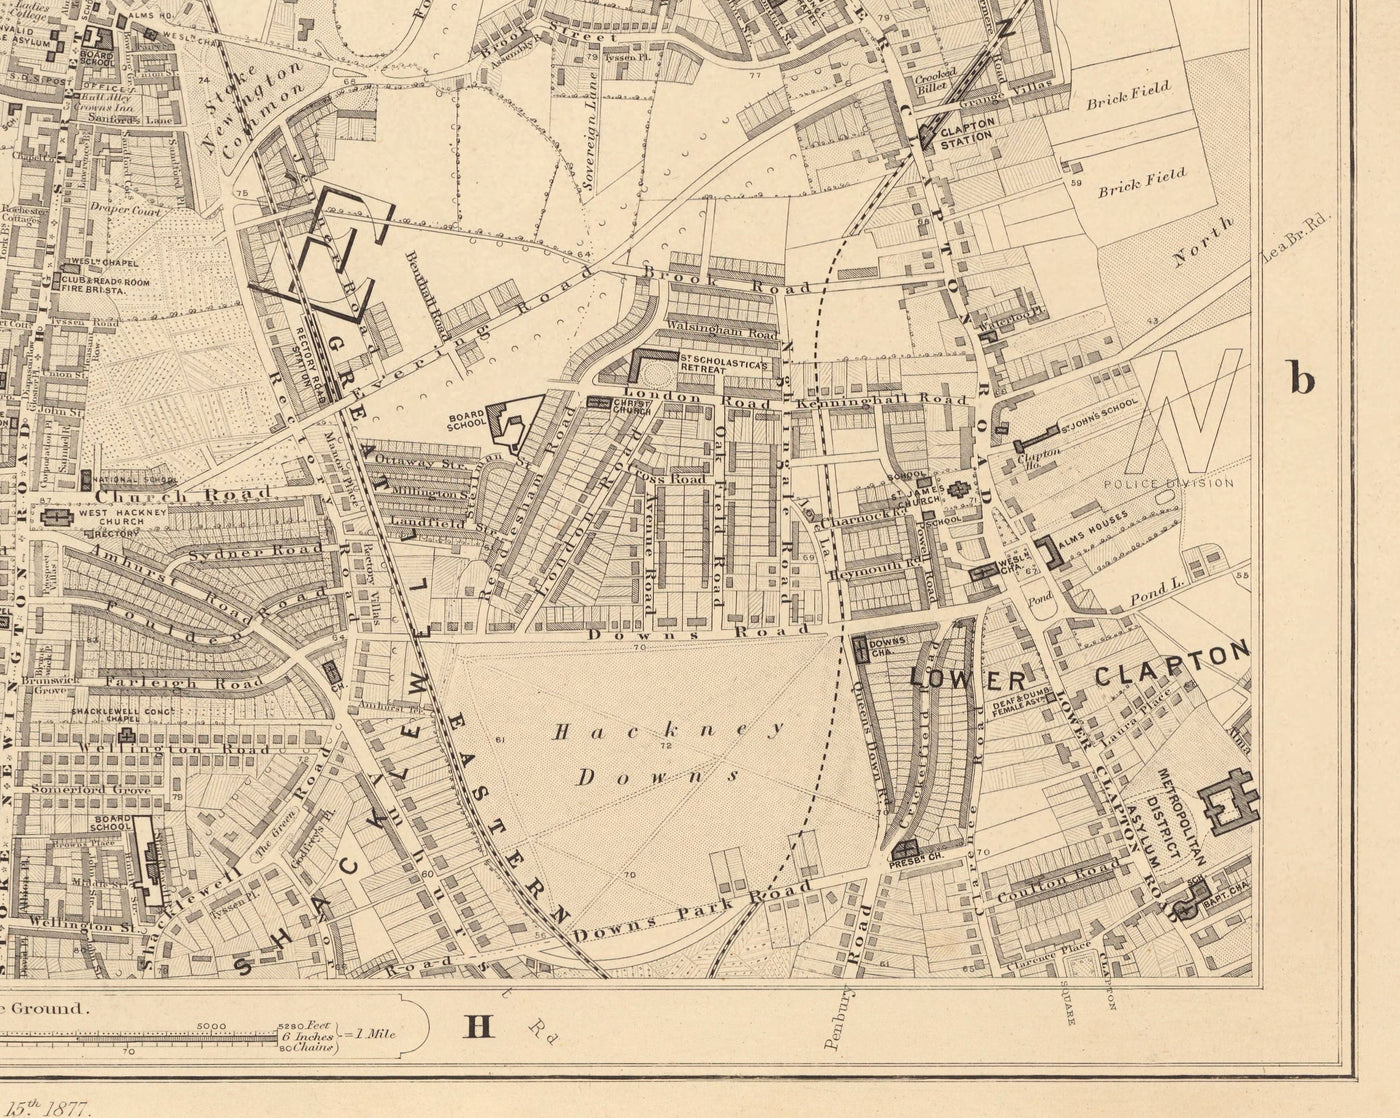 Mapa antiguo de North London, 1862 de Edward Stanford - FinSbury Park, Hackney Downs, Stoke Newington, Clapton - N4, N5, N15, N16, E5